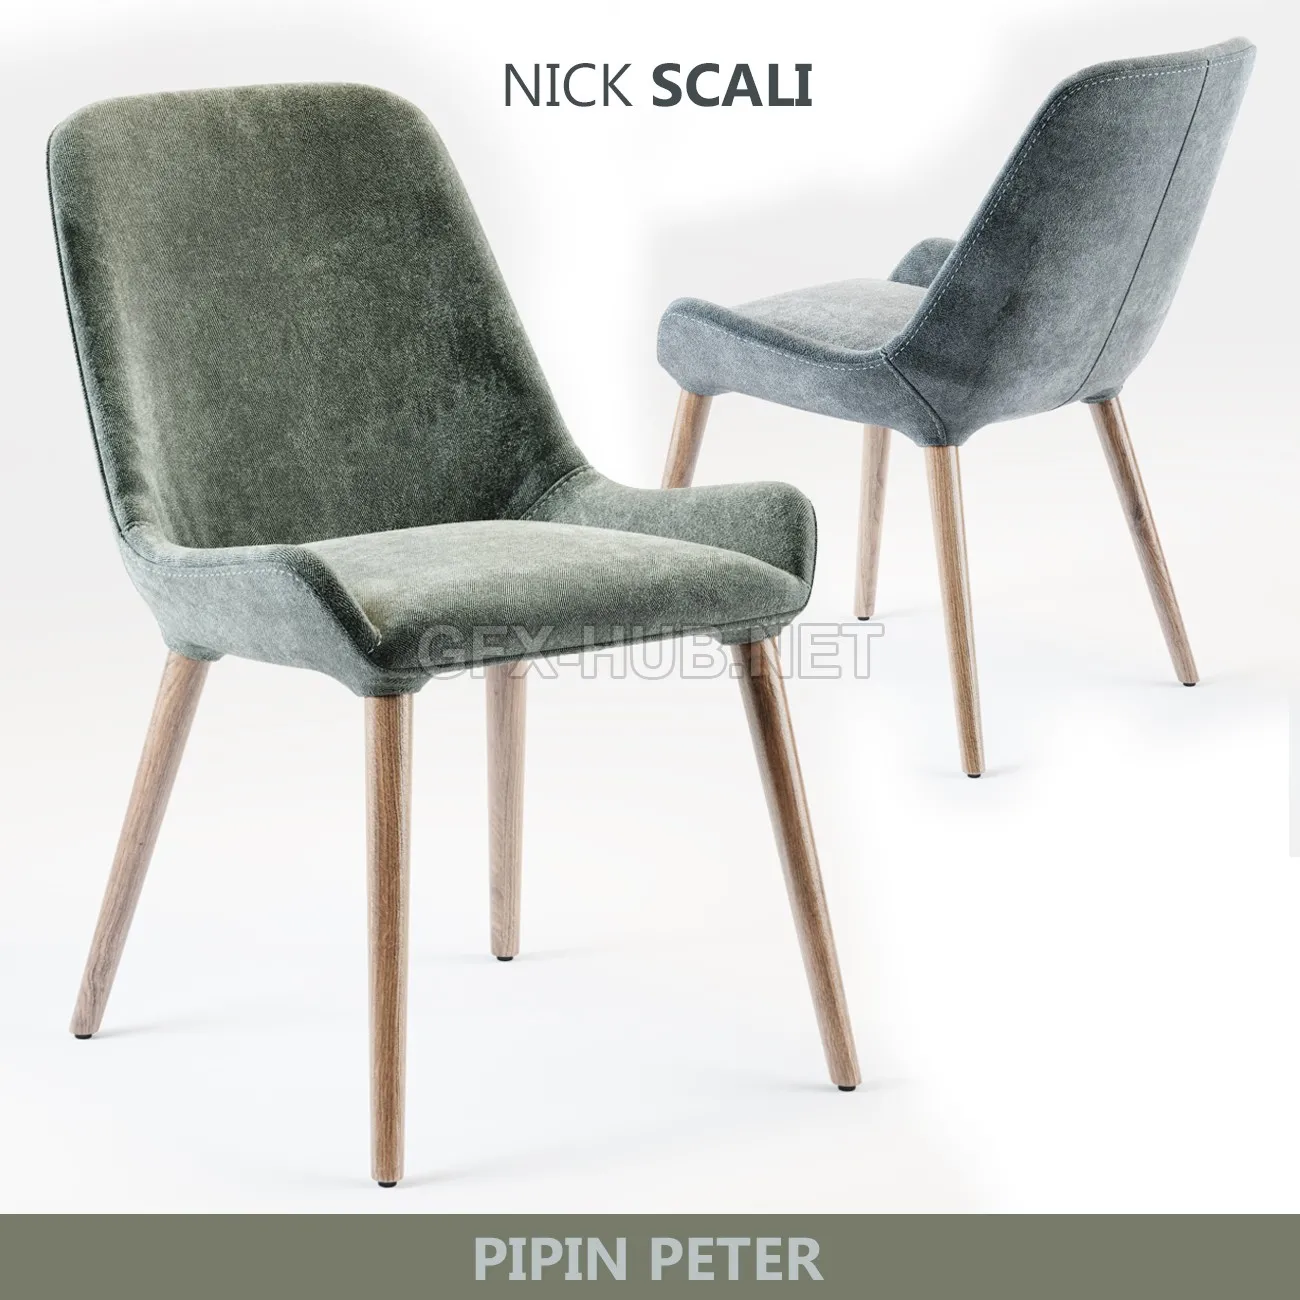 FURNITURE 3D MODELS – Nick Scali PIPPIN, PETER